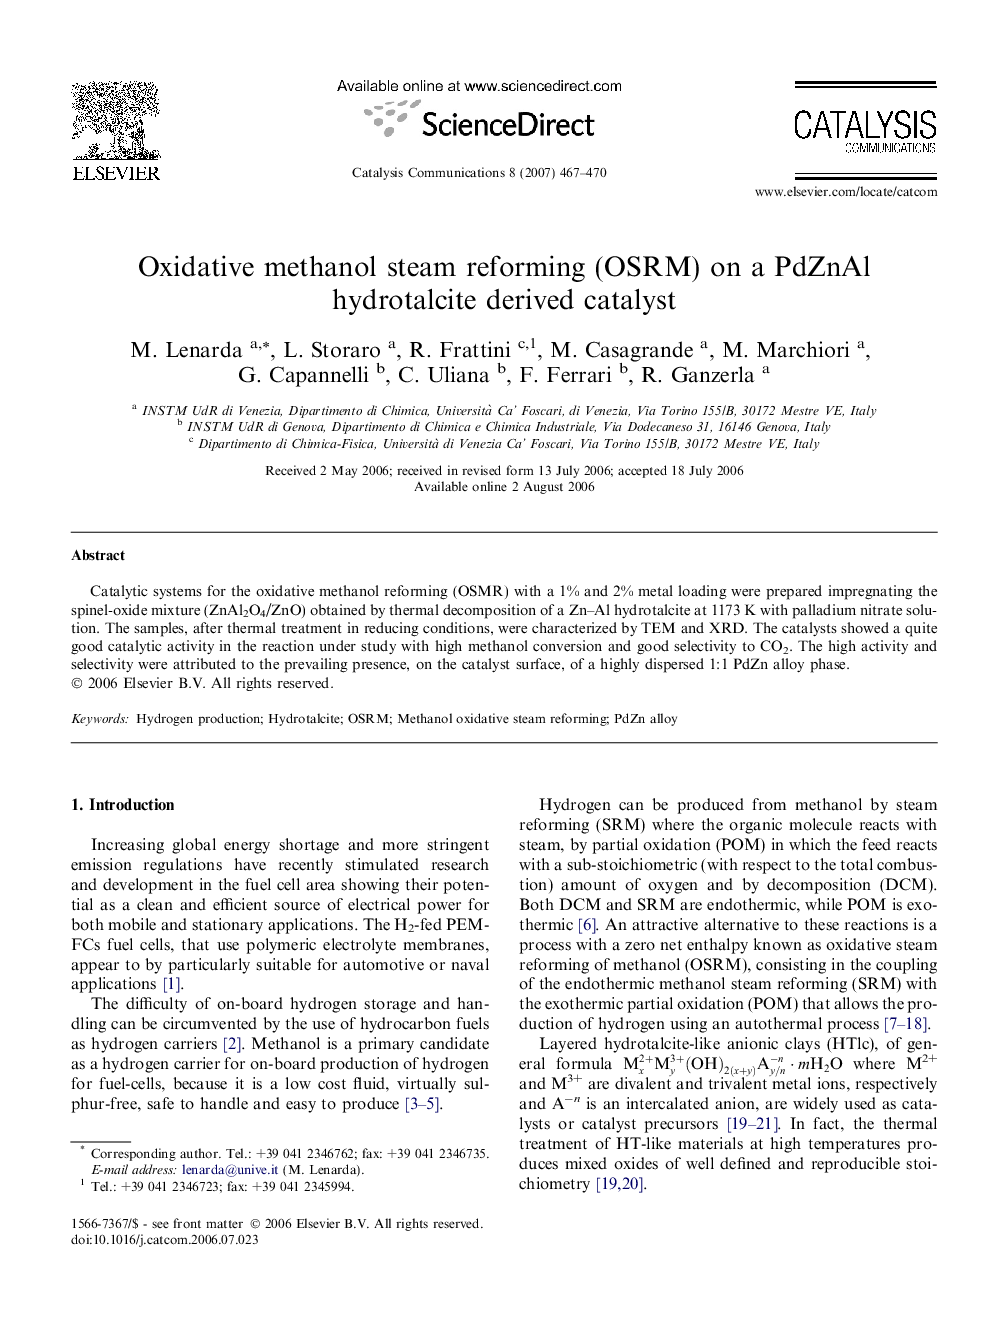 Oxidative methanol steam reforming (OSRM) on a PdZnAl hydrotalcite derived catalyst